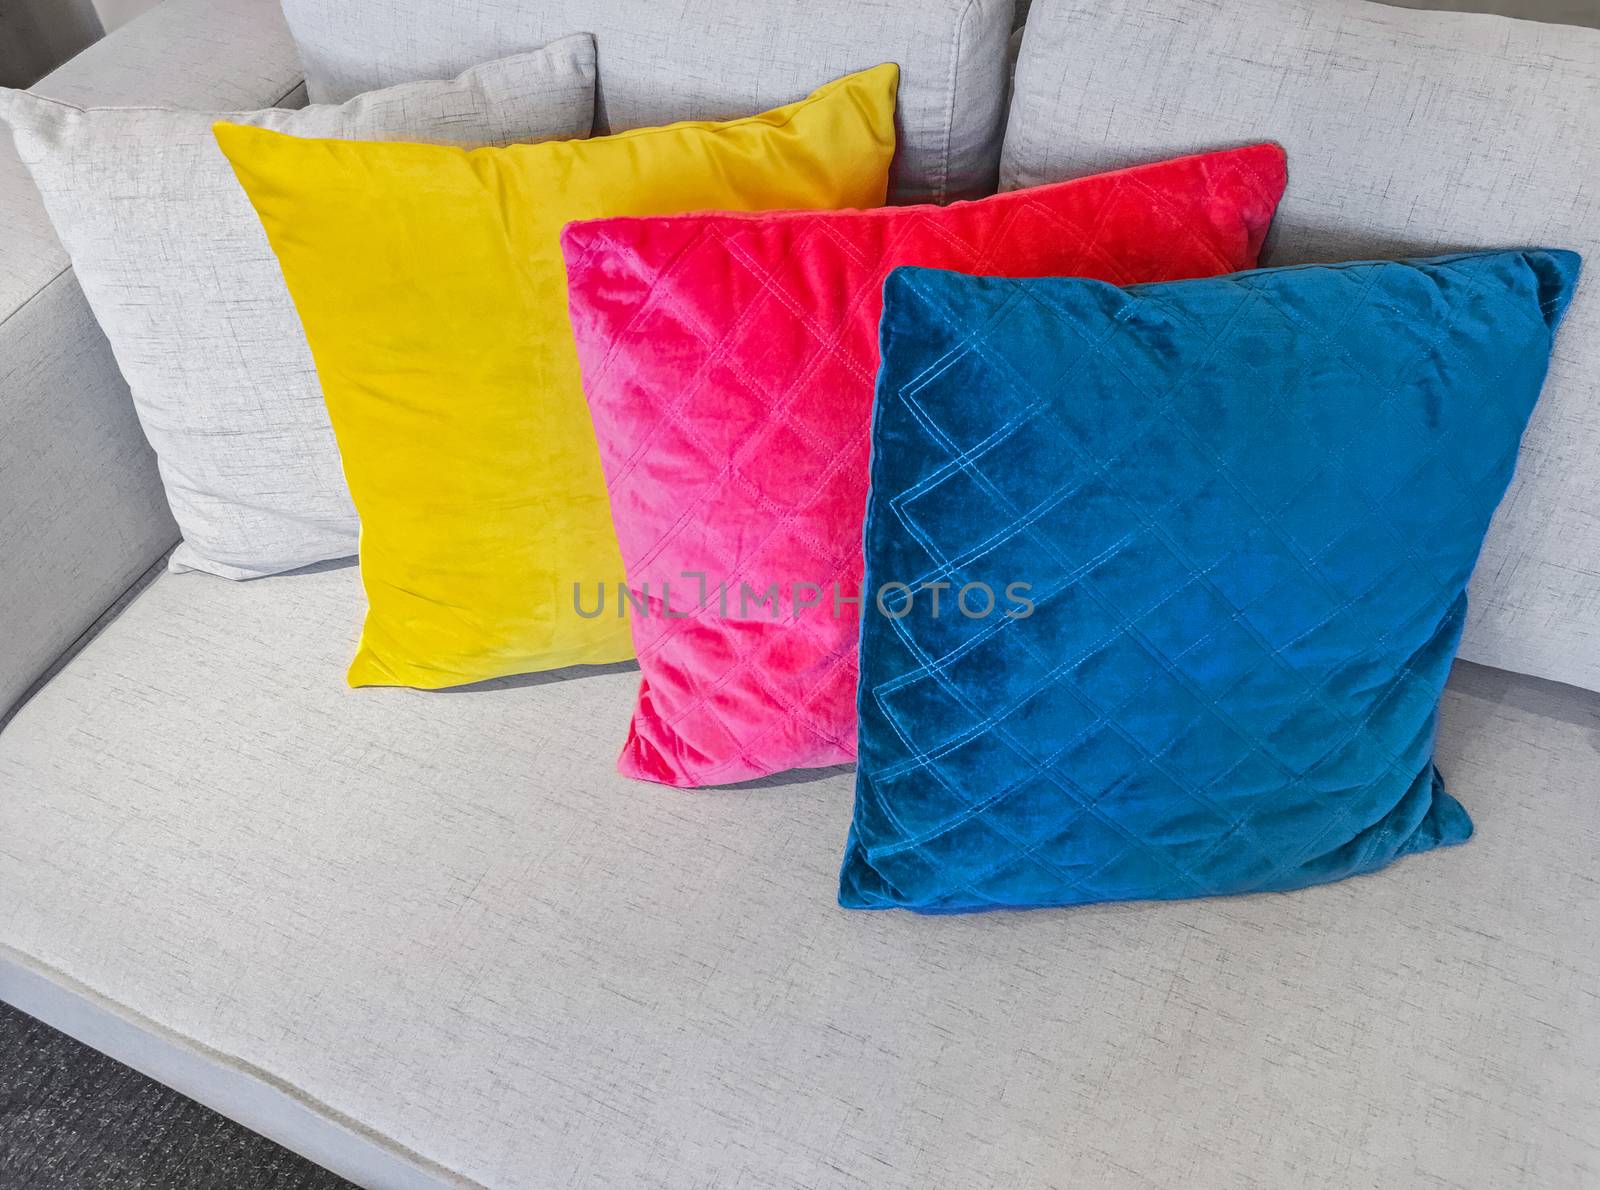 Bright multicolored cushions decorating a simple gray sofa.